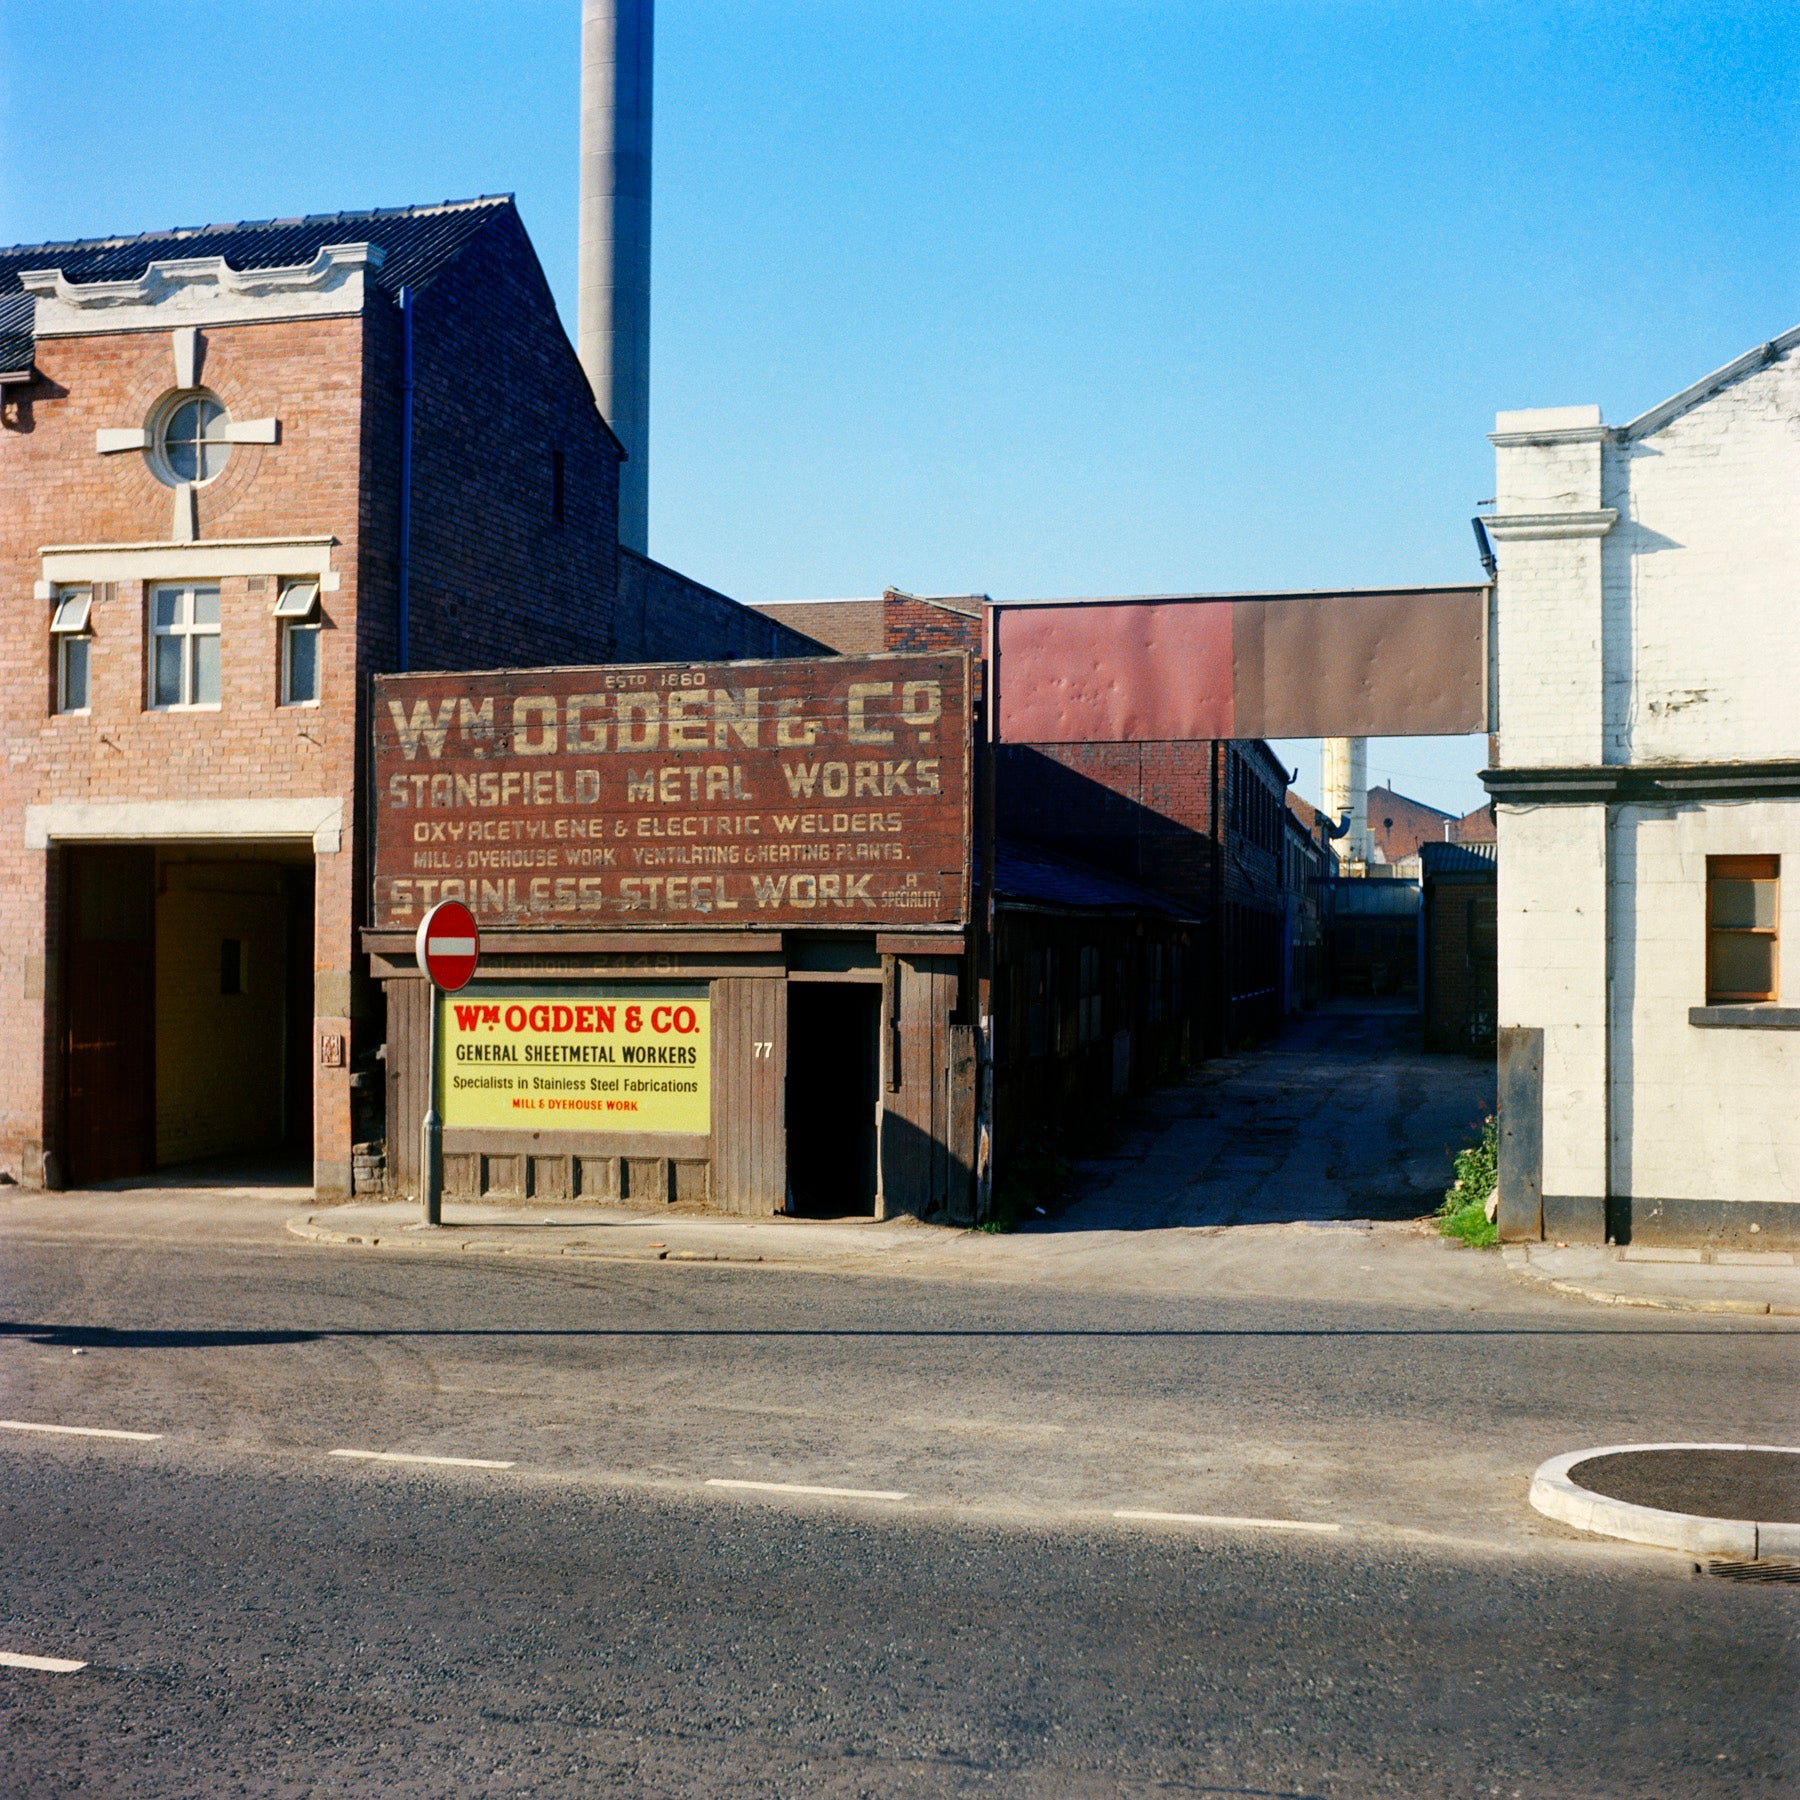 Kirkstall Road, Leeds, 1980s - 7x9" Print